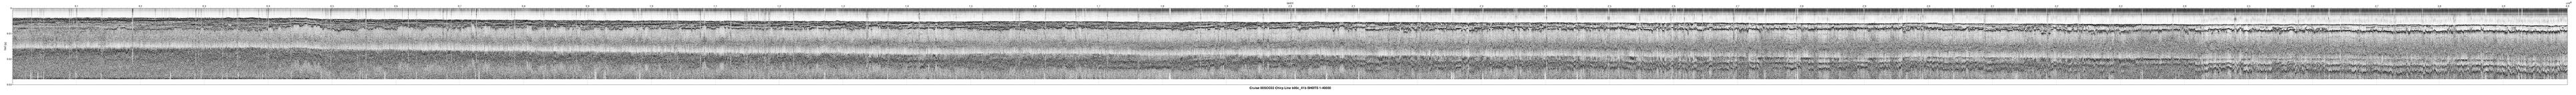 00SCC02 b00c_41b seismic profile image